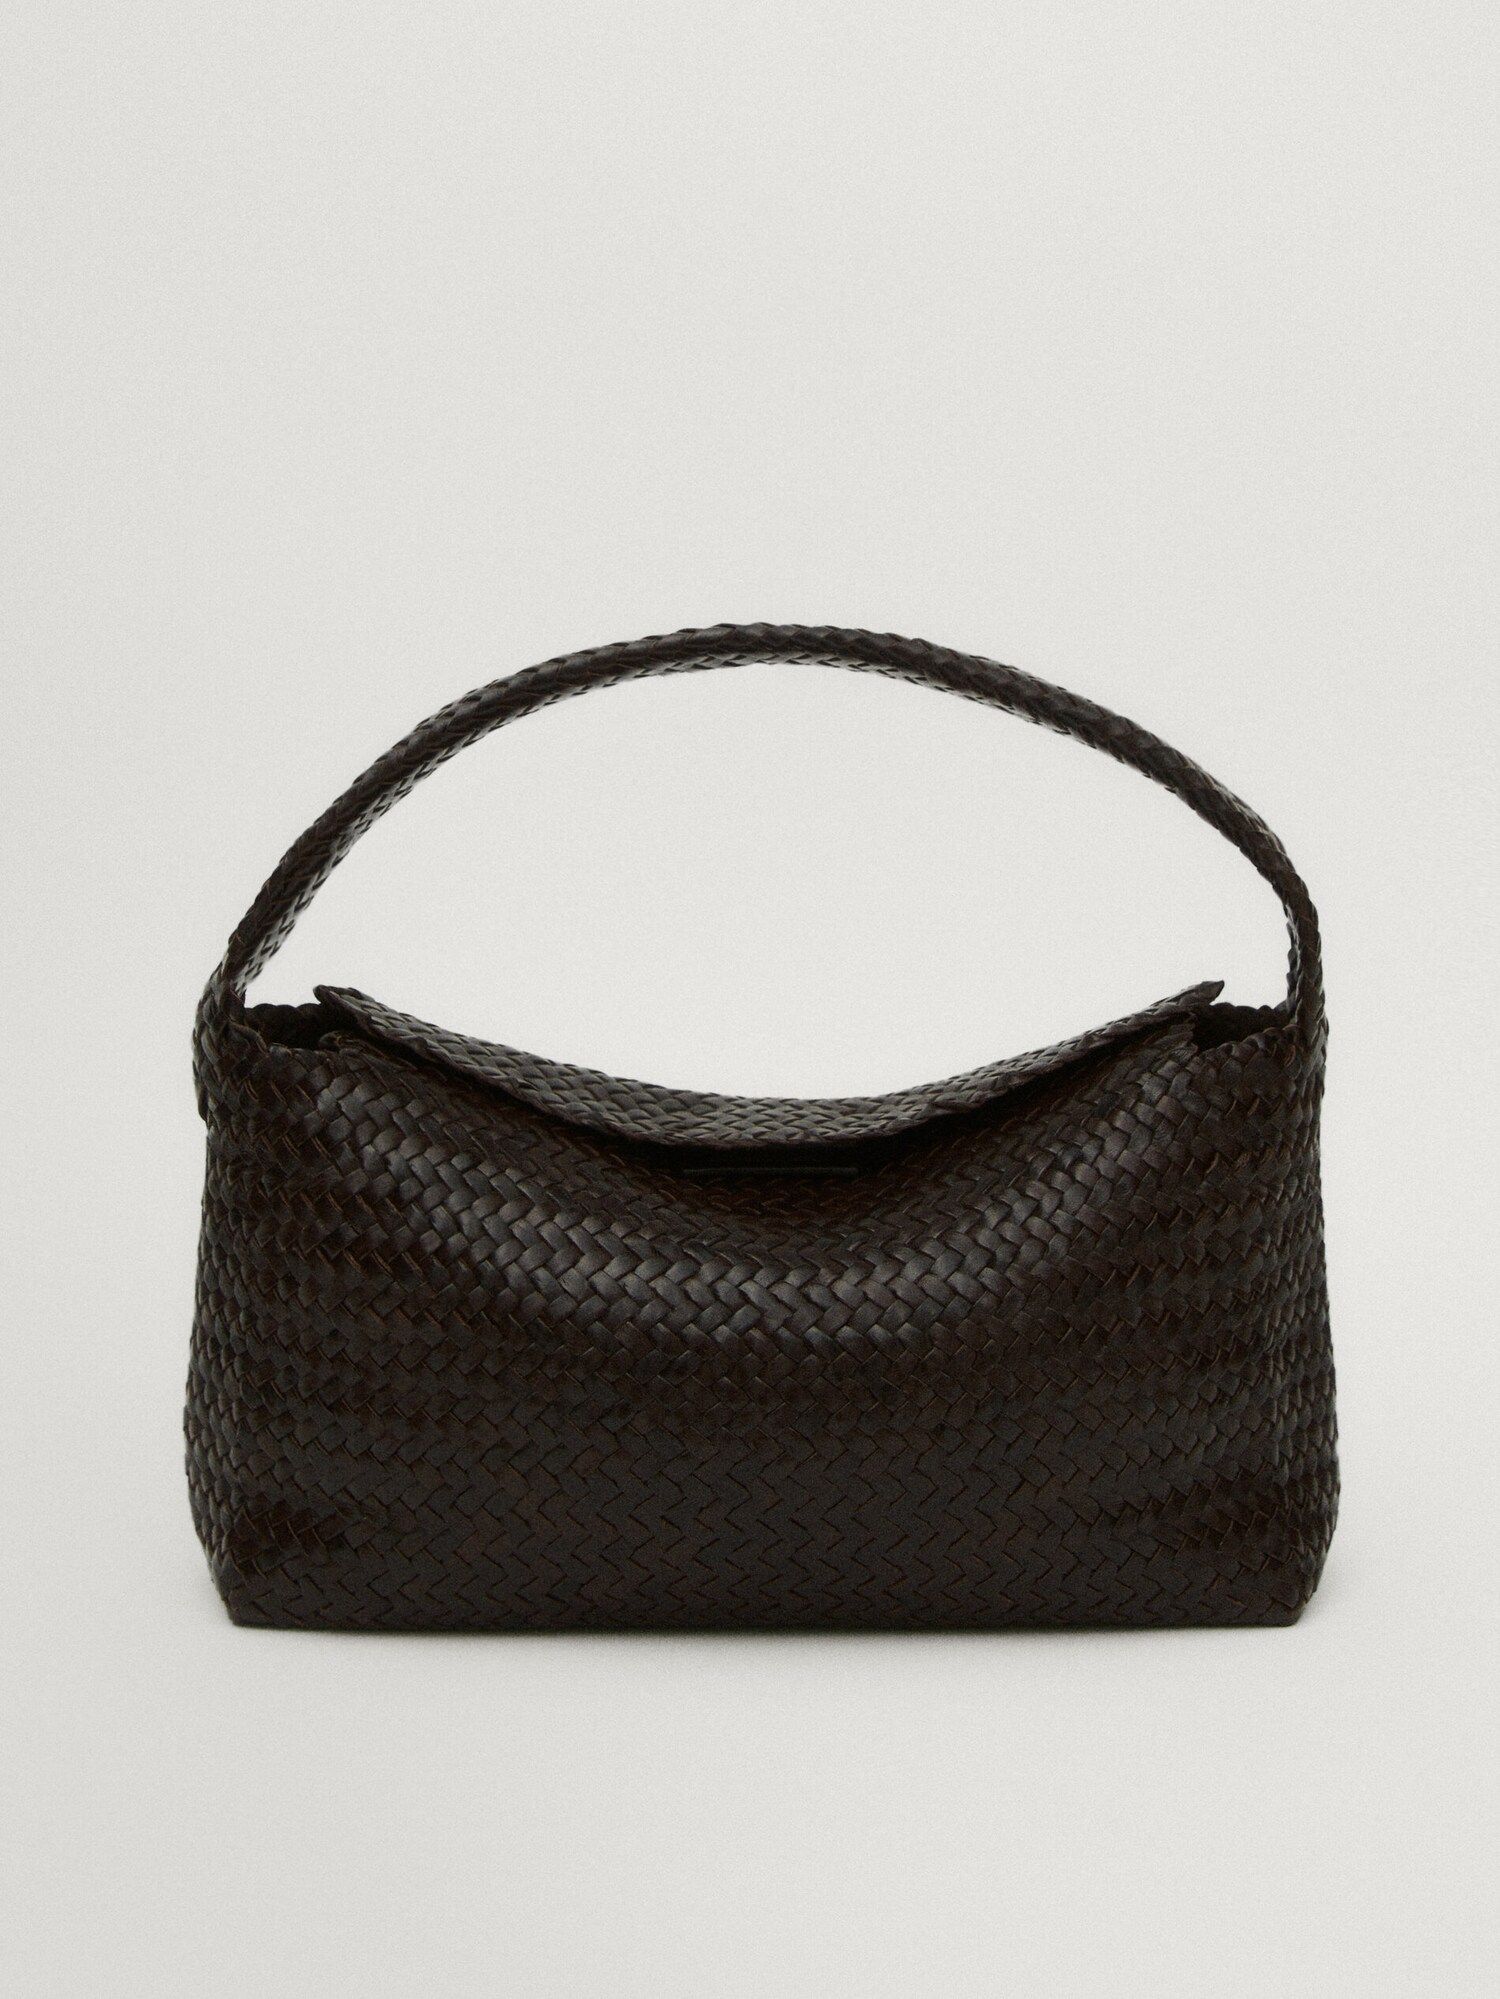 Woven nappa leather bag | Massimo Dutti UK